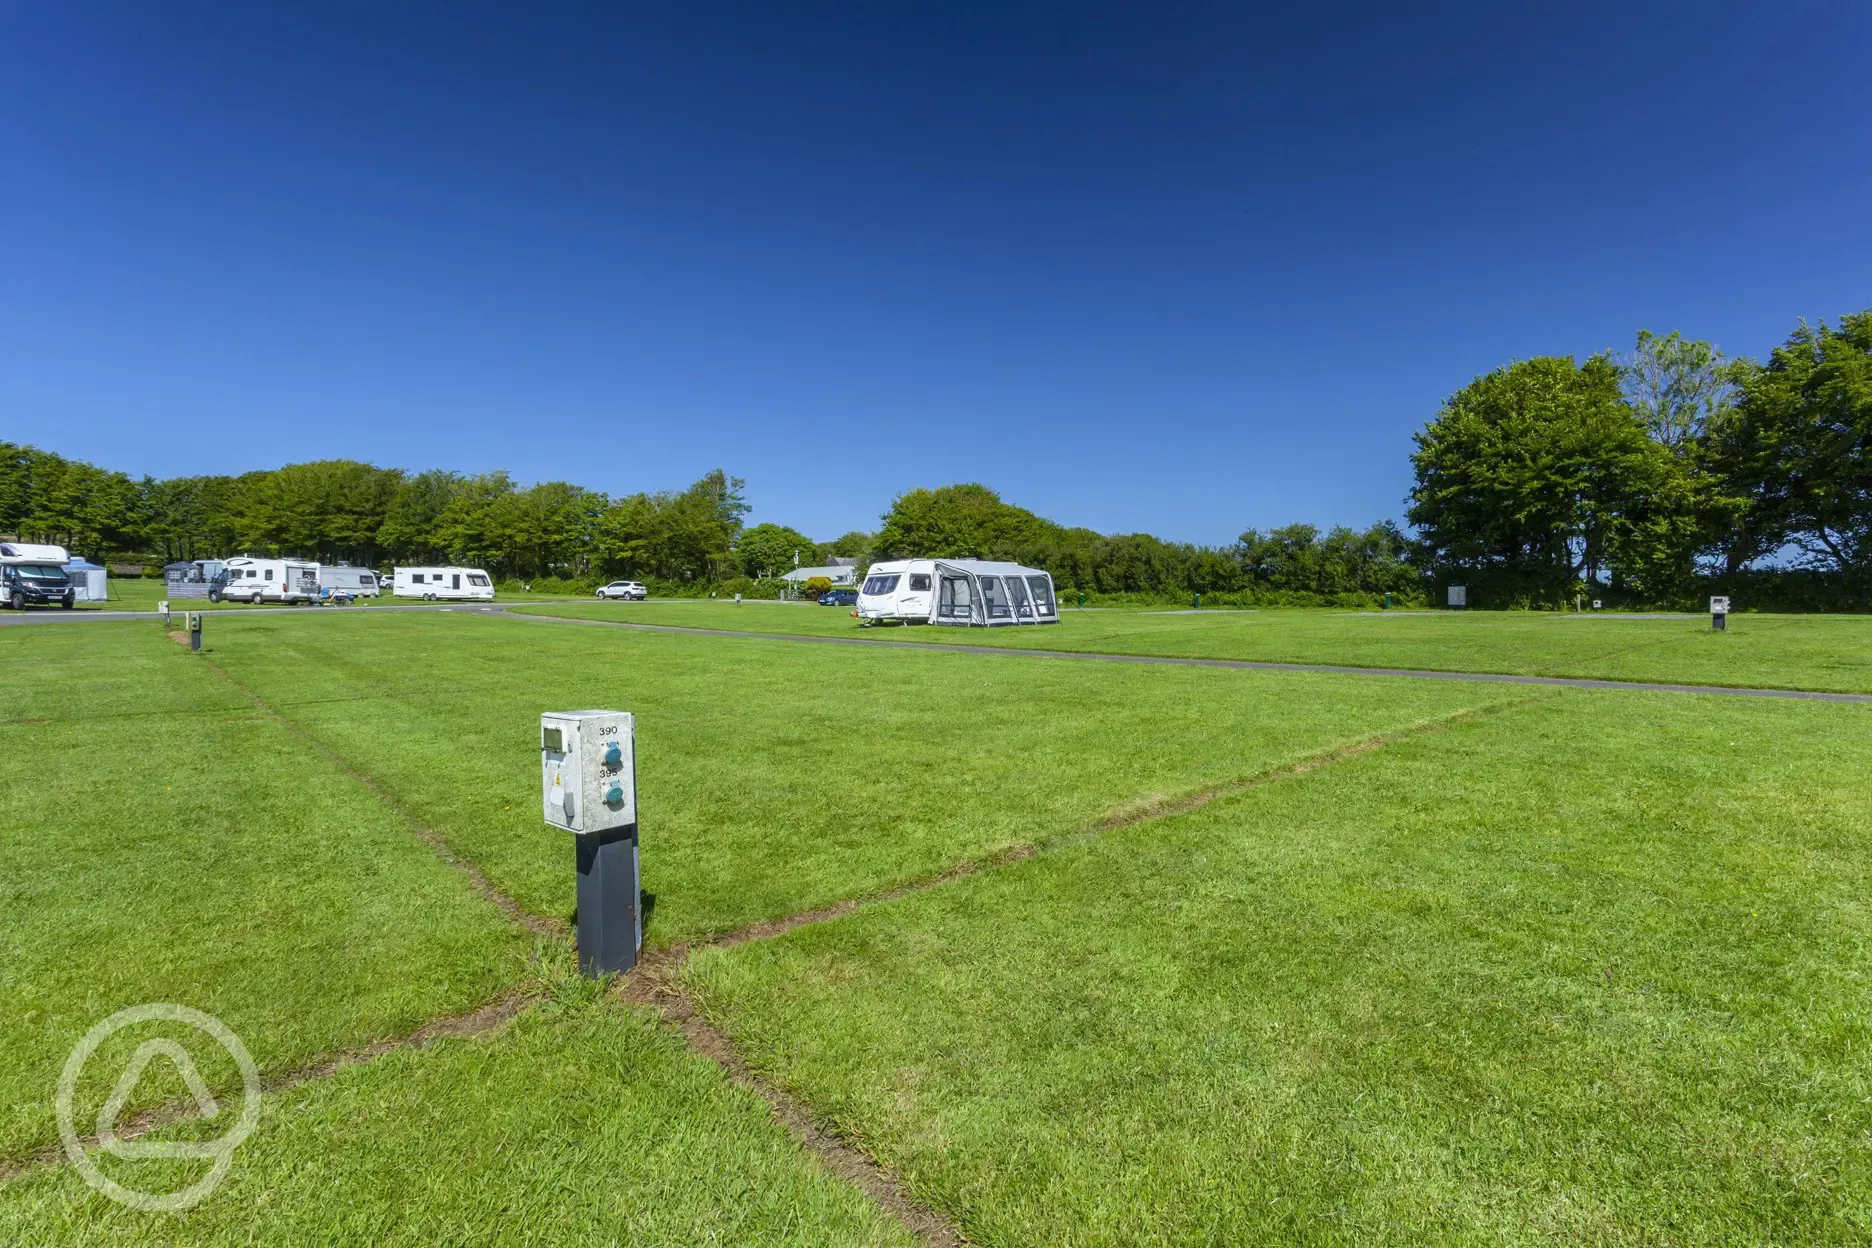 Electric grass caravan pitches